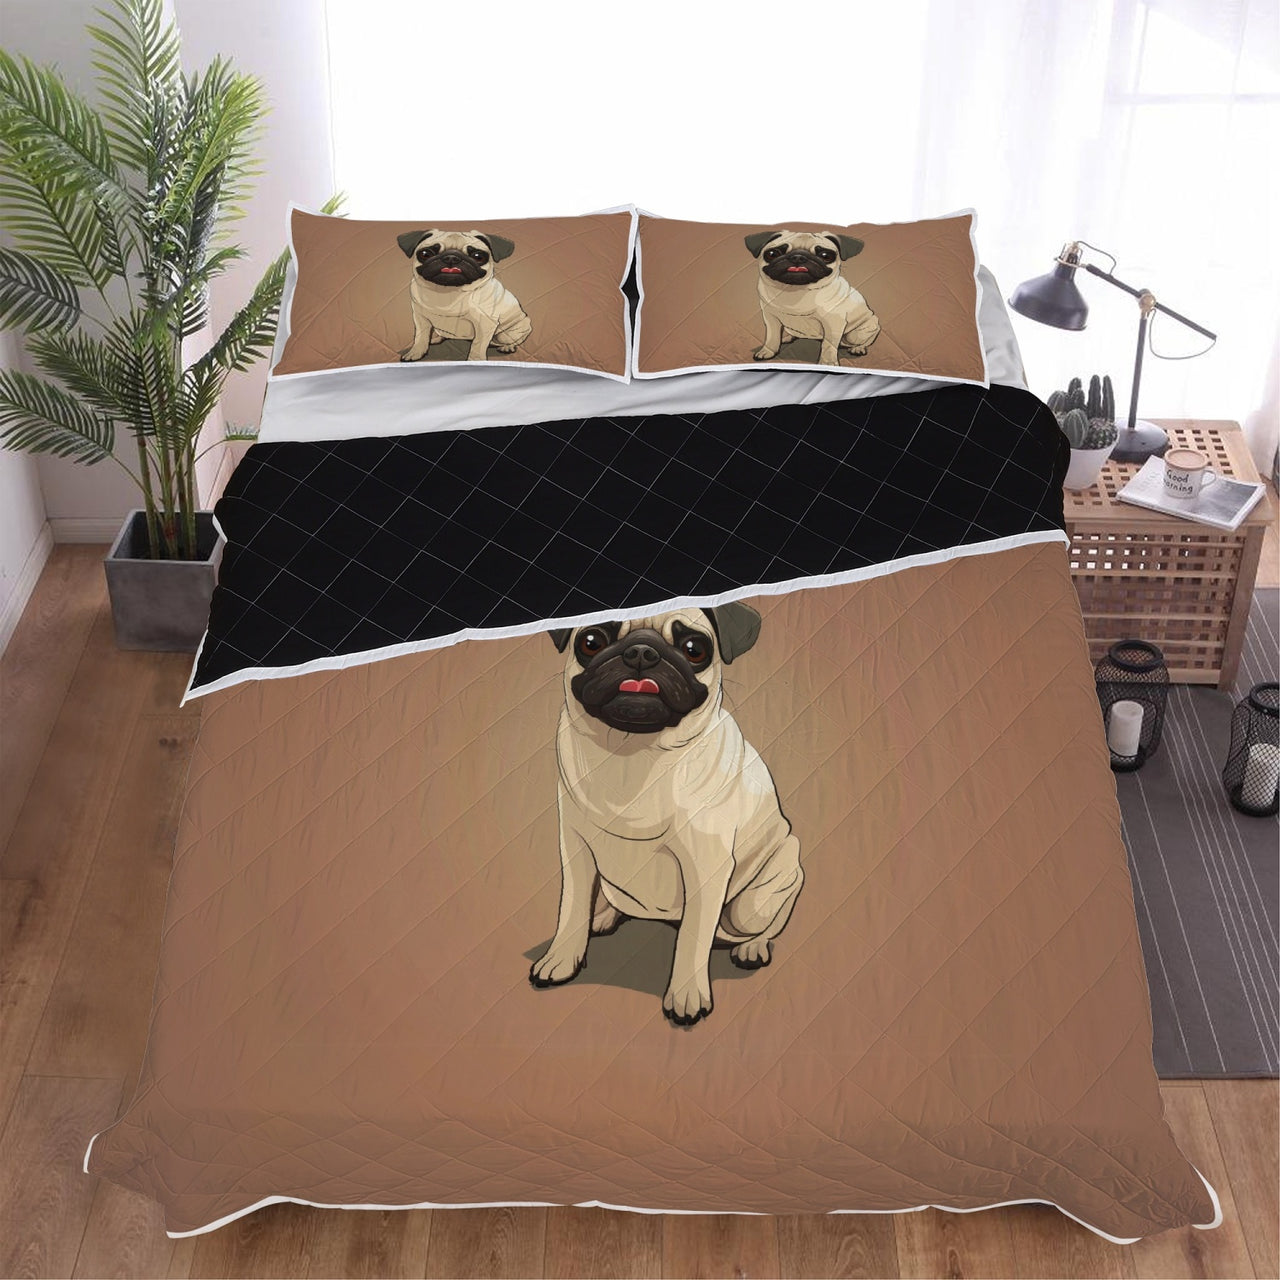 Cute Pug Bed Set